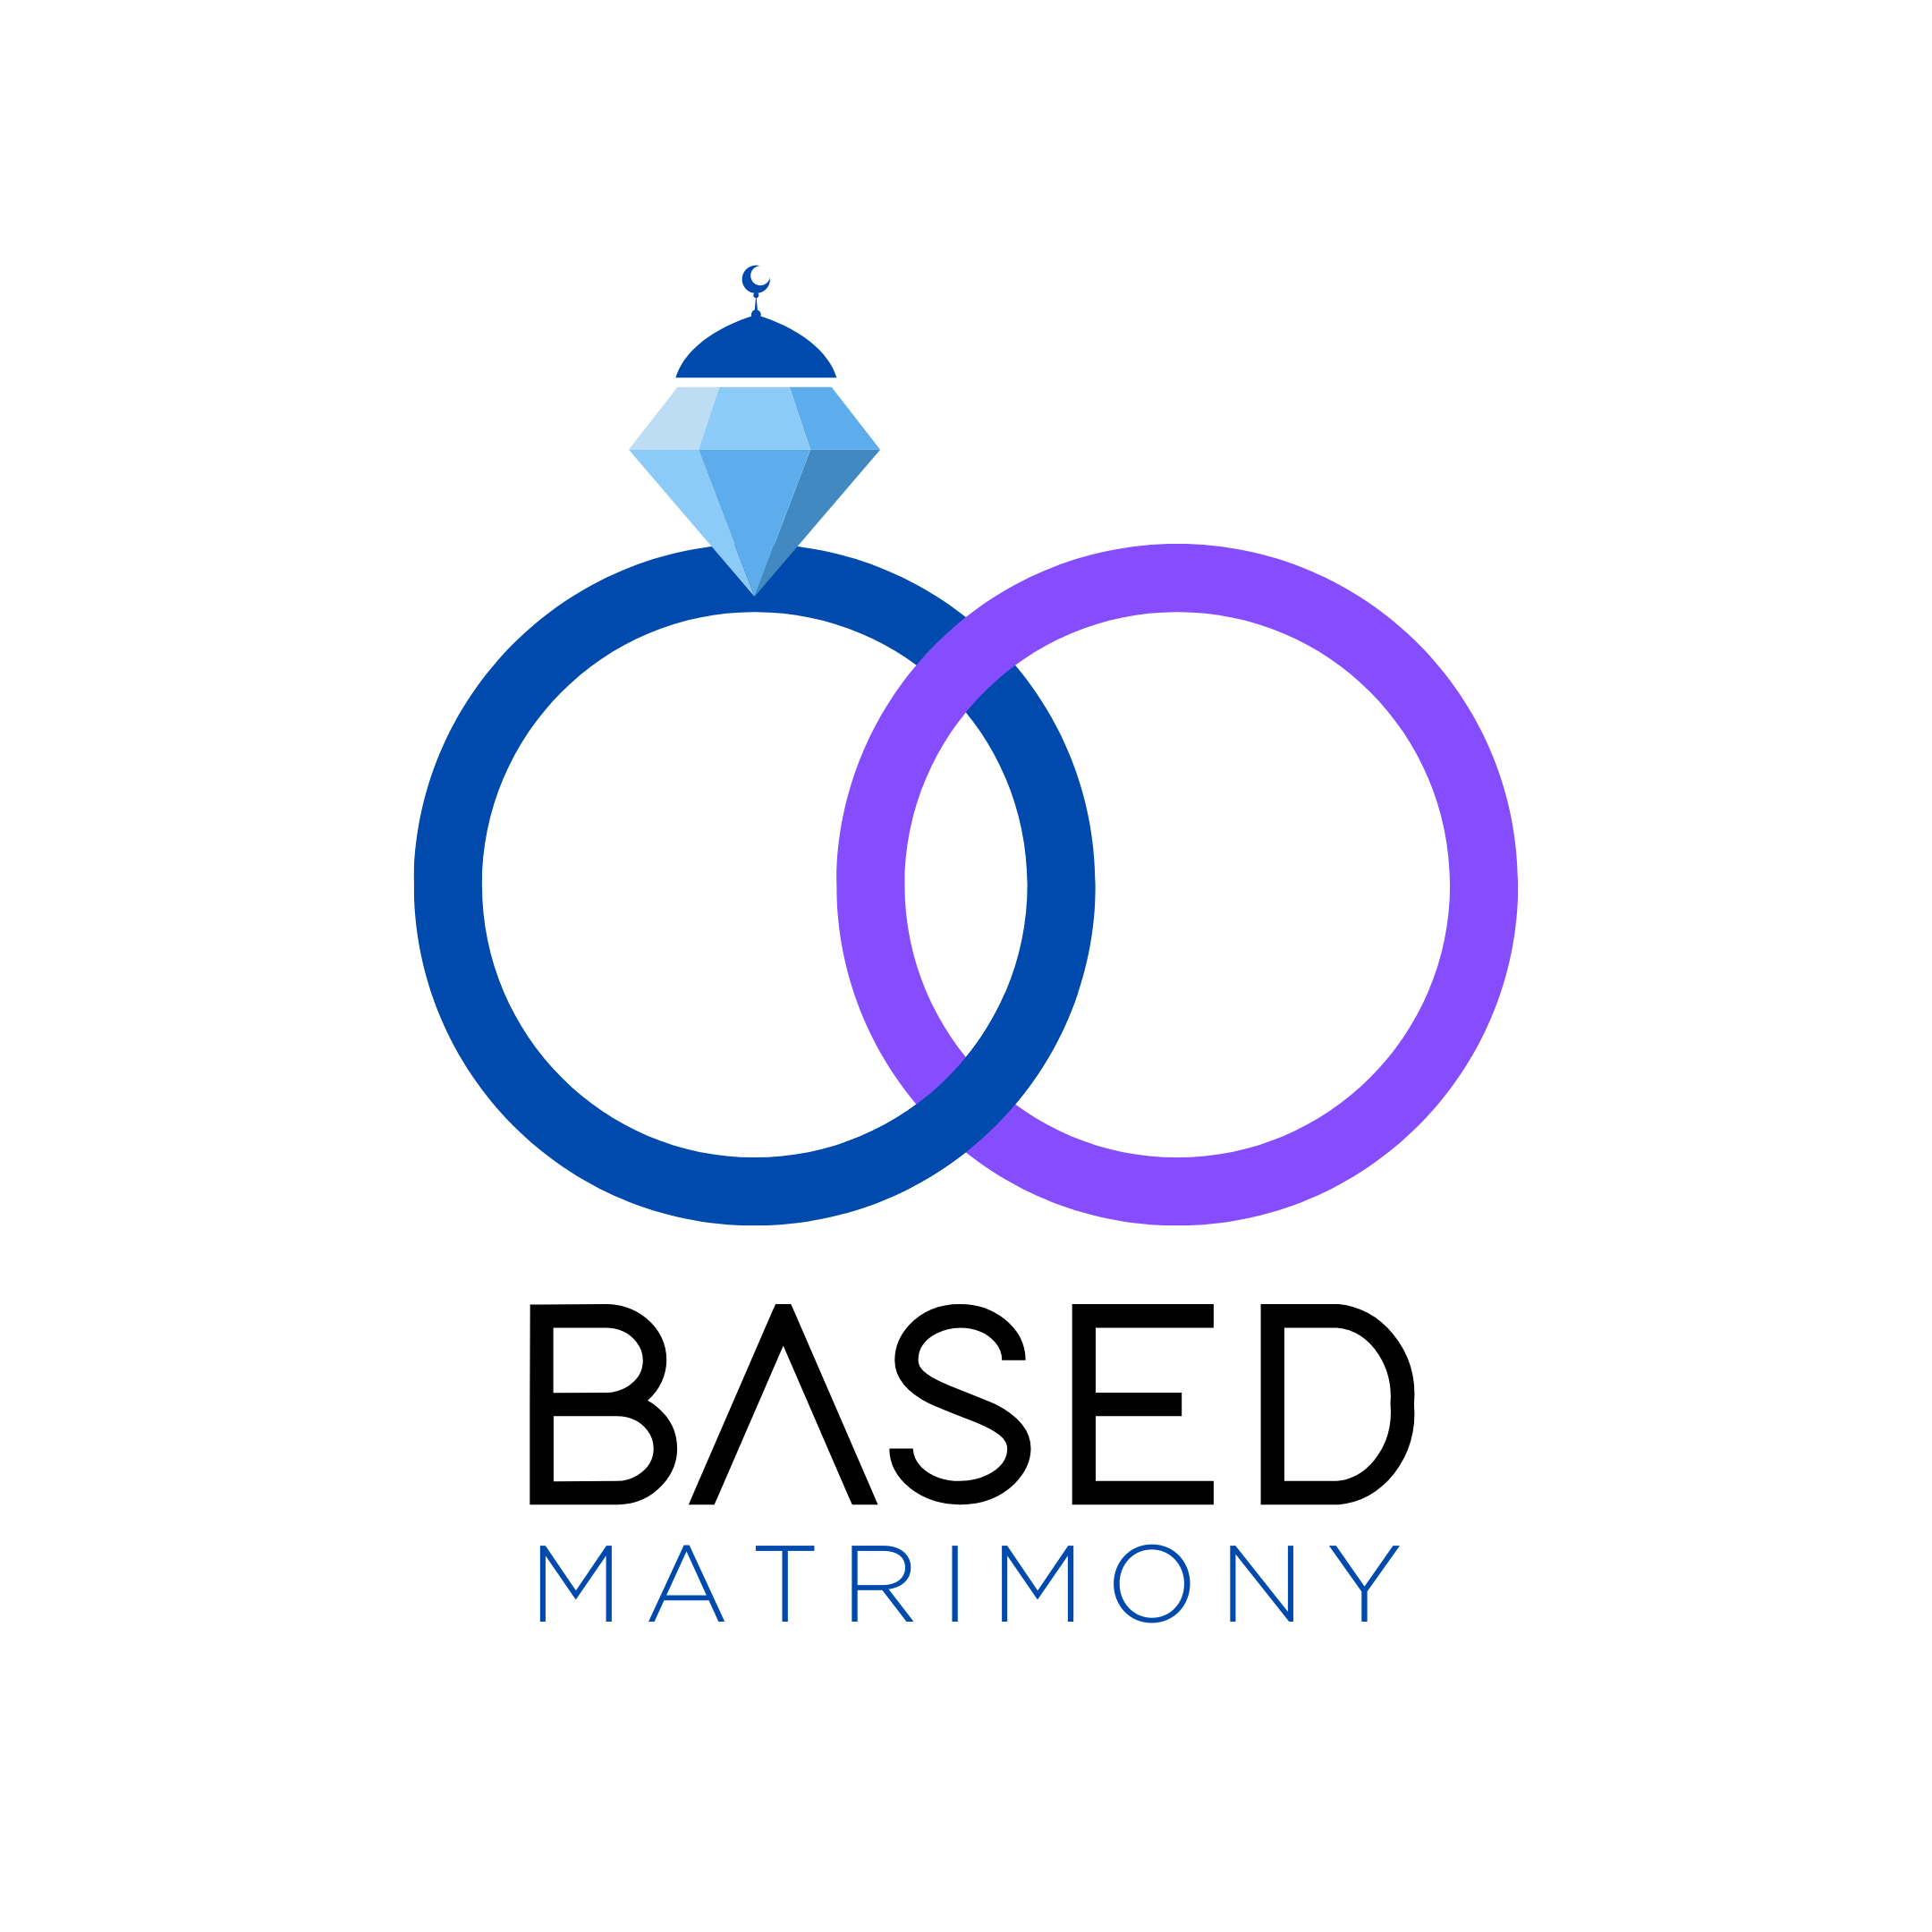 Matrimonial Company